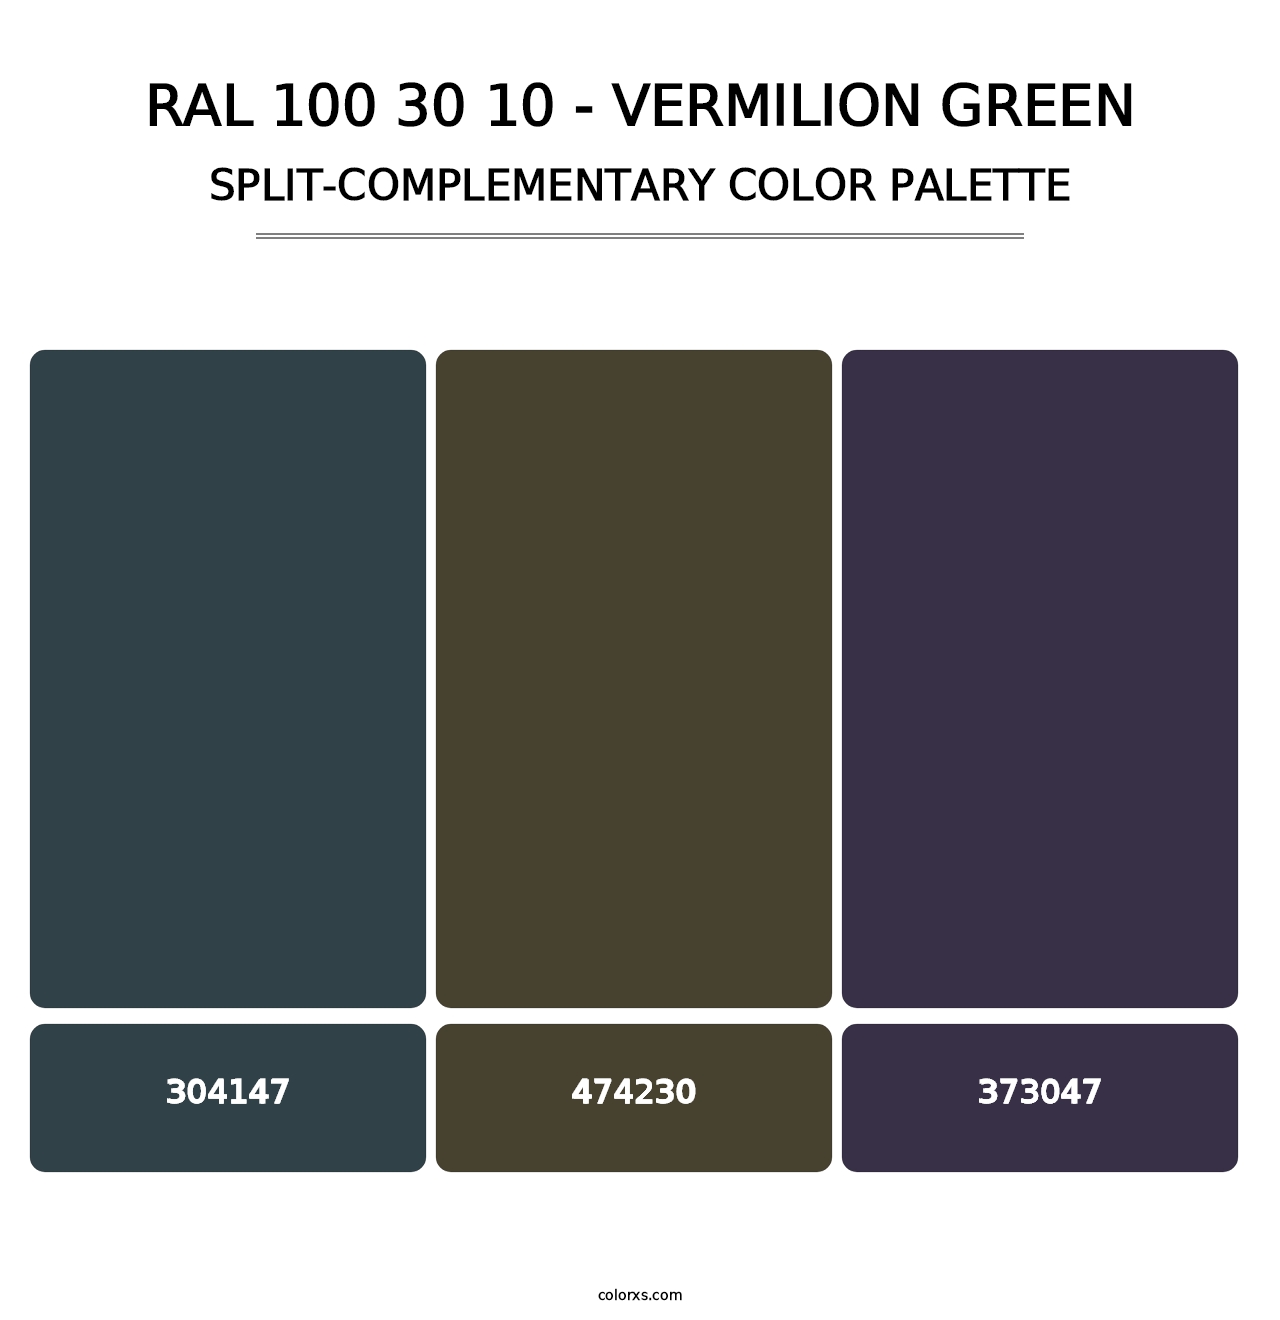 RAL 100 30 10 - Vermilion Green - Split-Complementary Color Palette